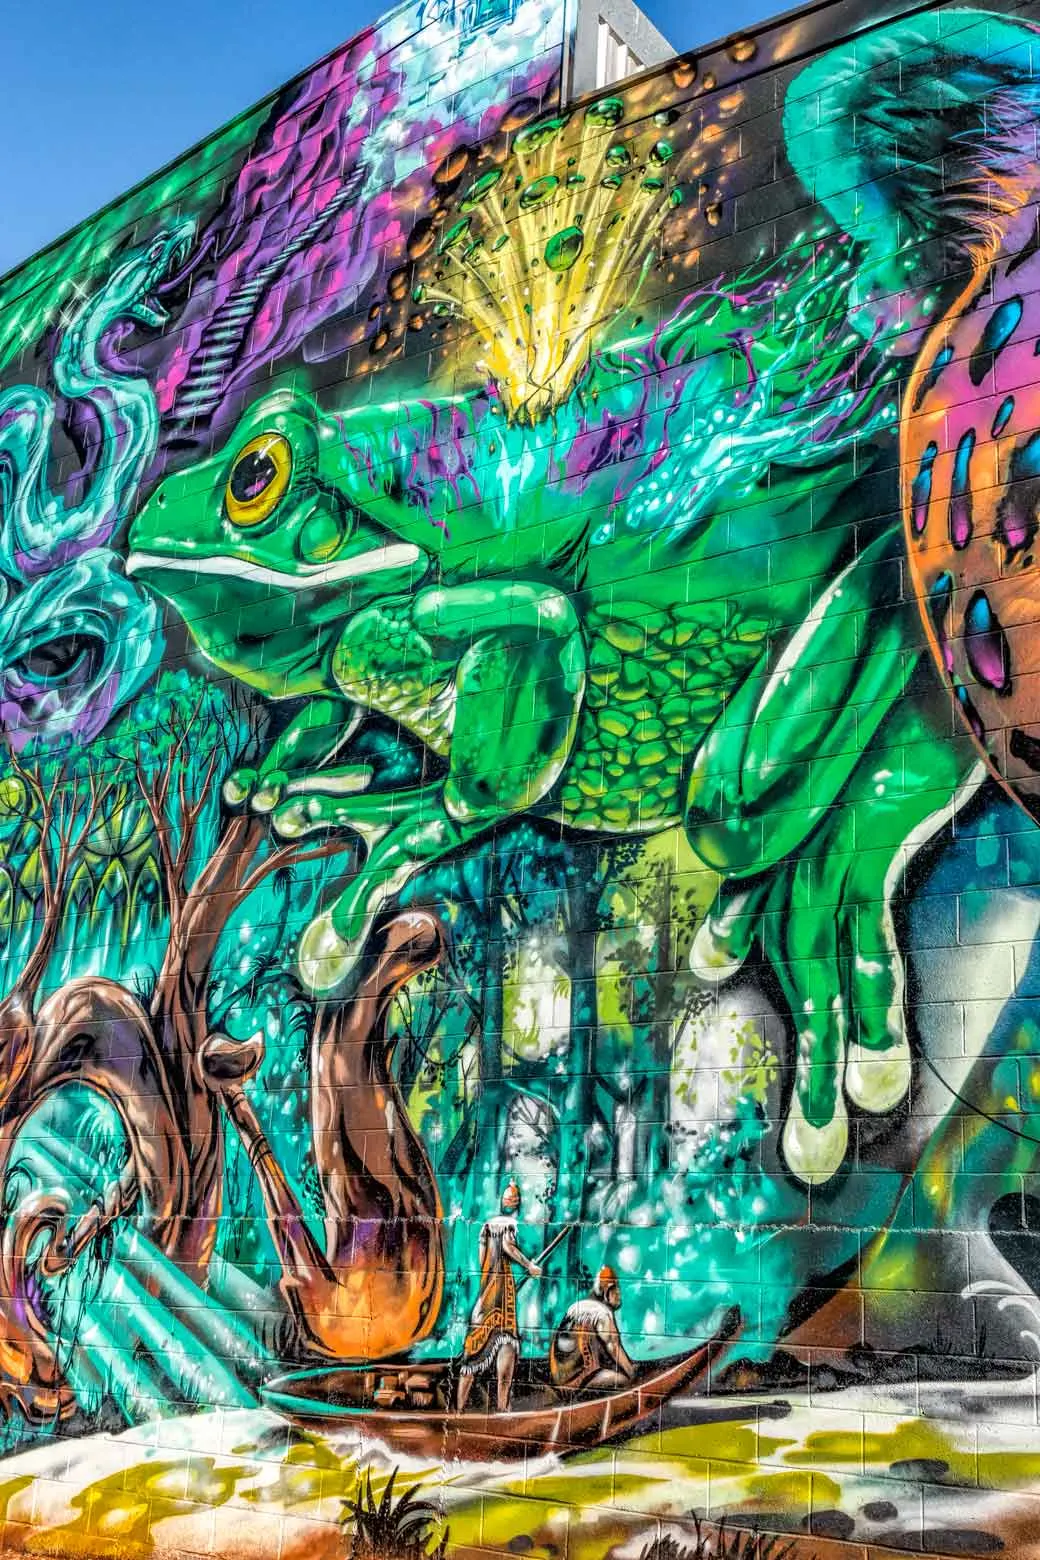 Street art of fantasy Amazon scene on brick building in Toowoomba